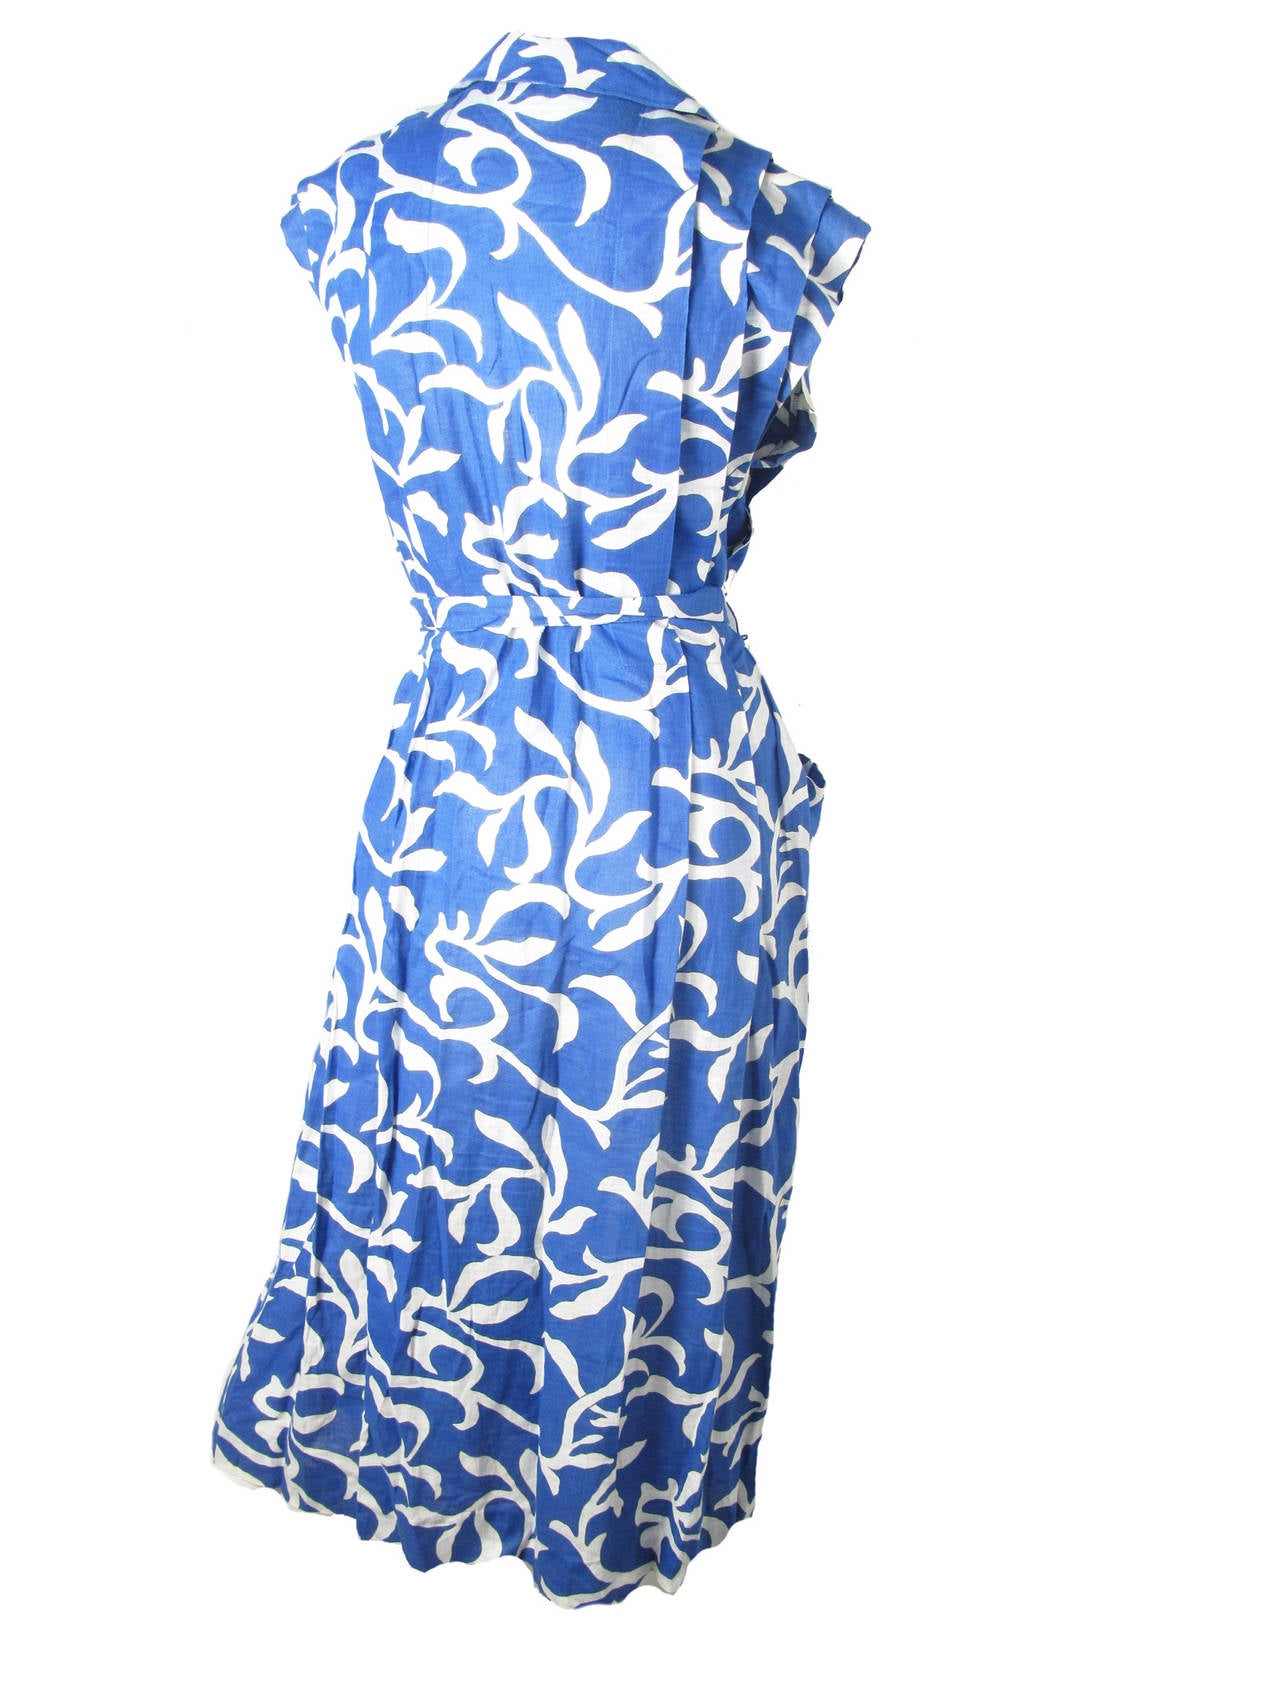 Women's Guy Laroche Linen Dress with Large Pockets